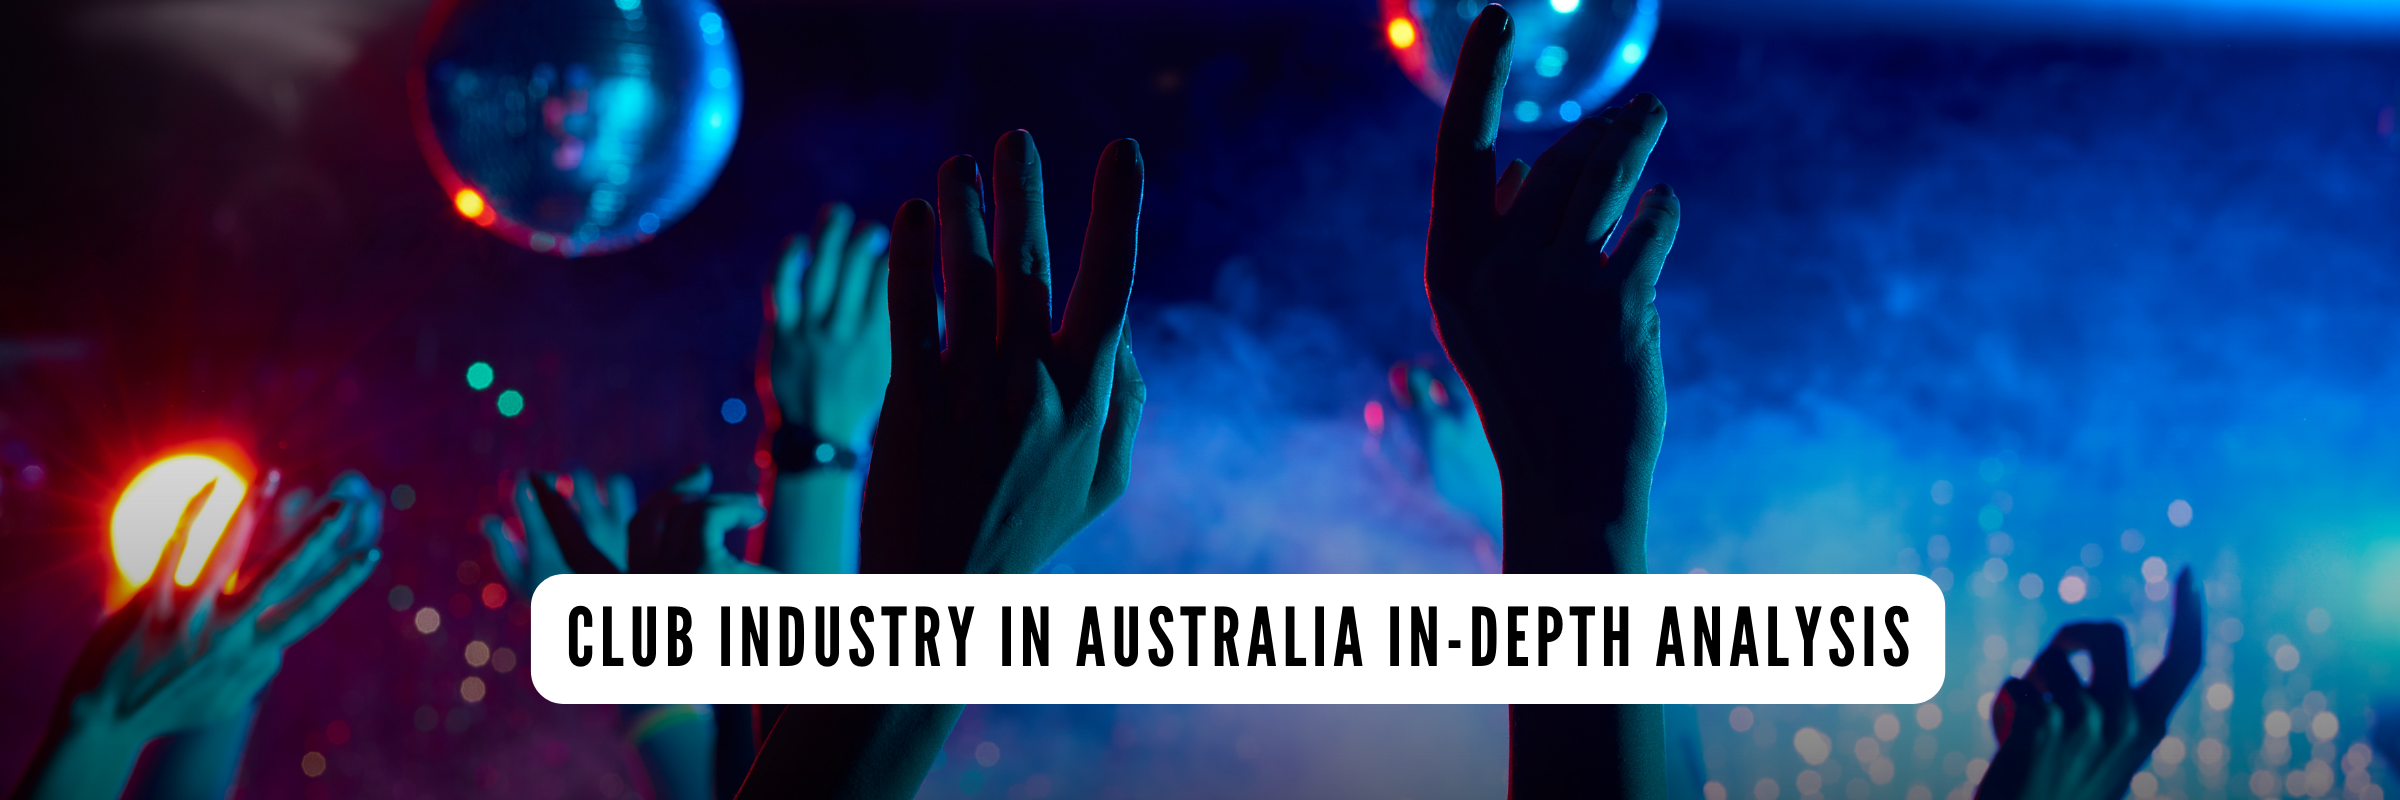 Club Industry in Australia in-depth analysis